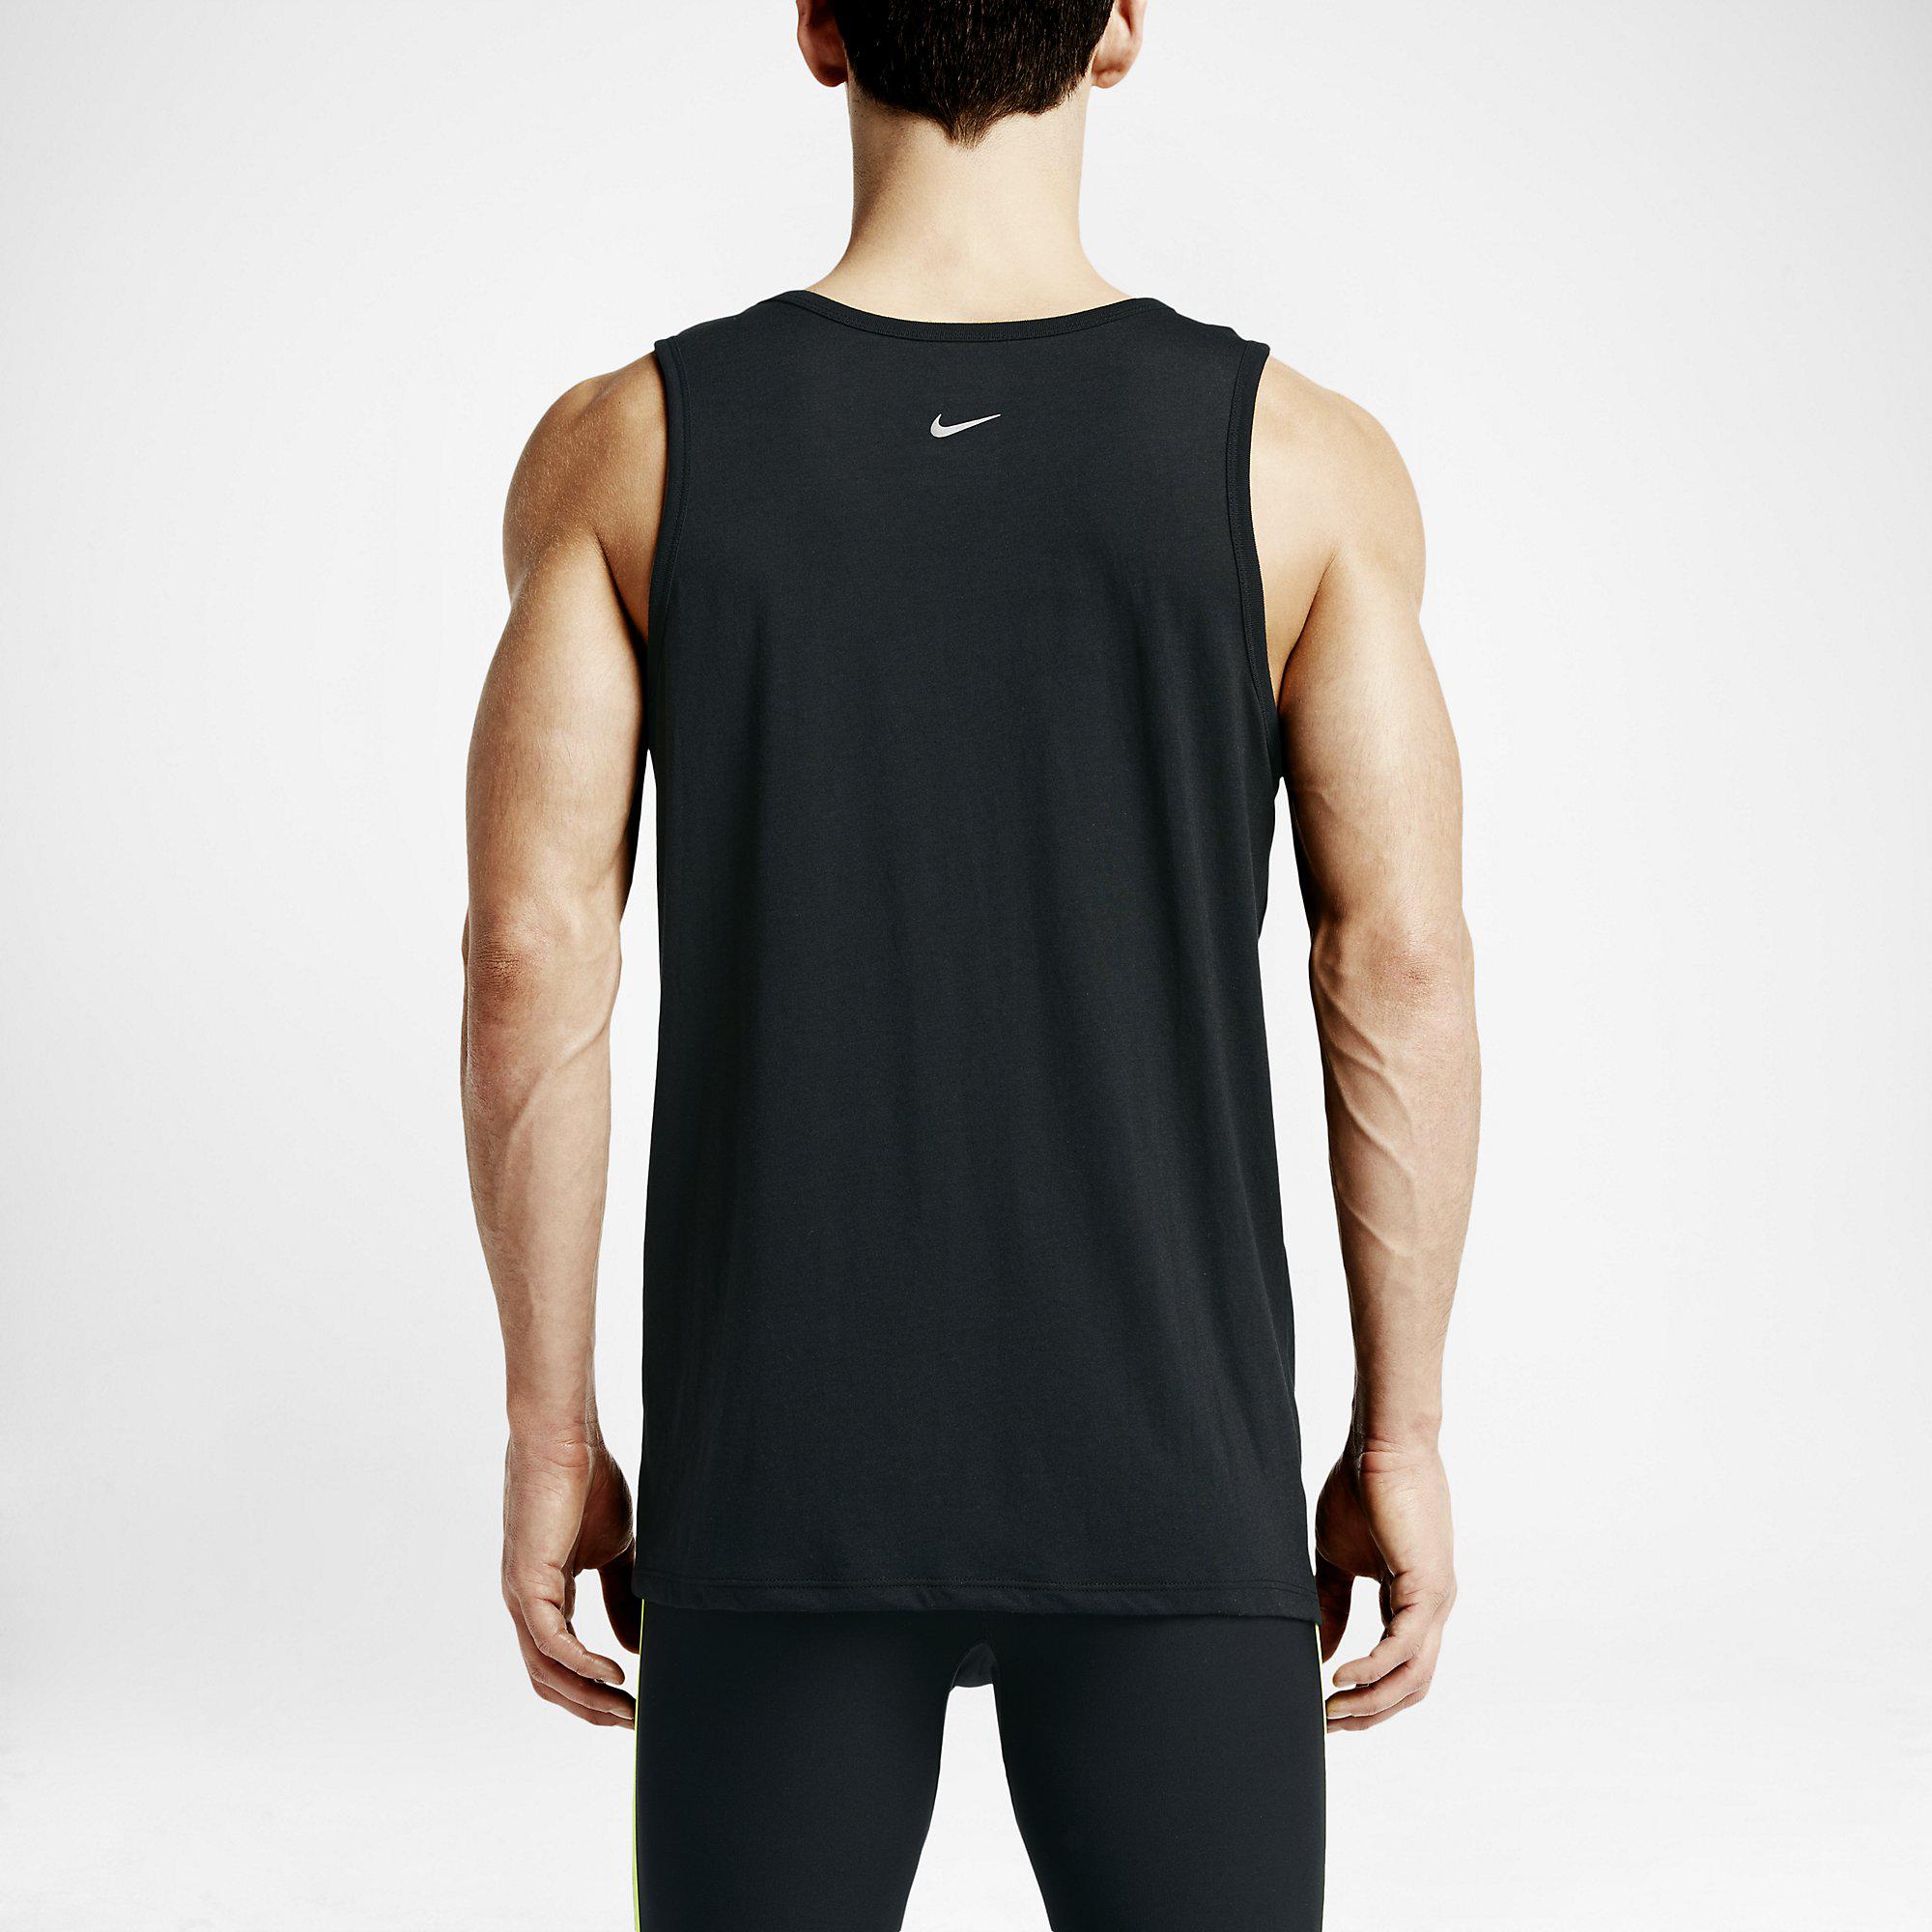 Nike Mens Endless Runner Tank Top - Black - Tennisnuts.com